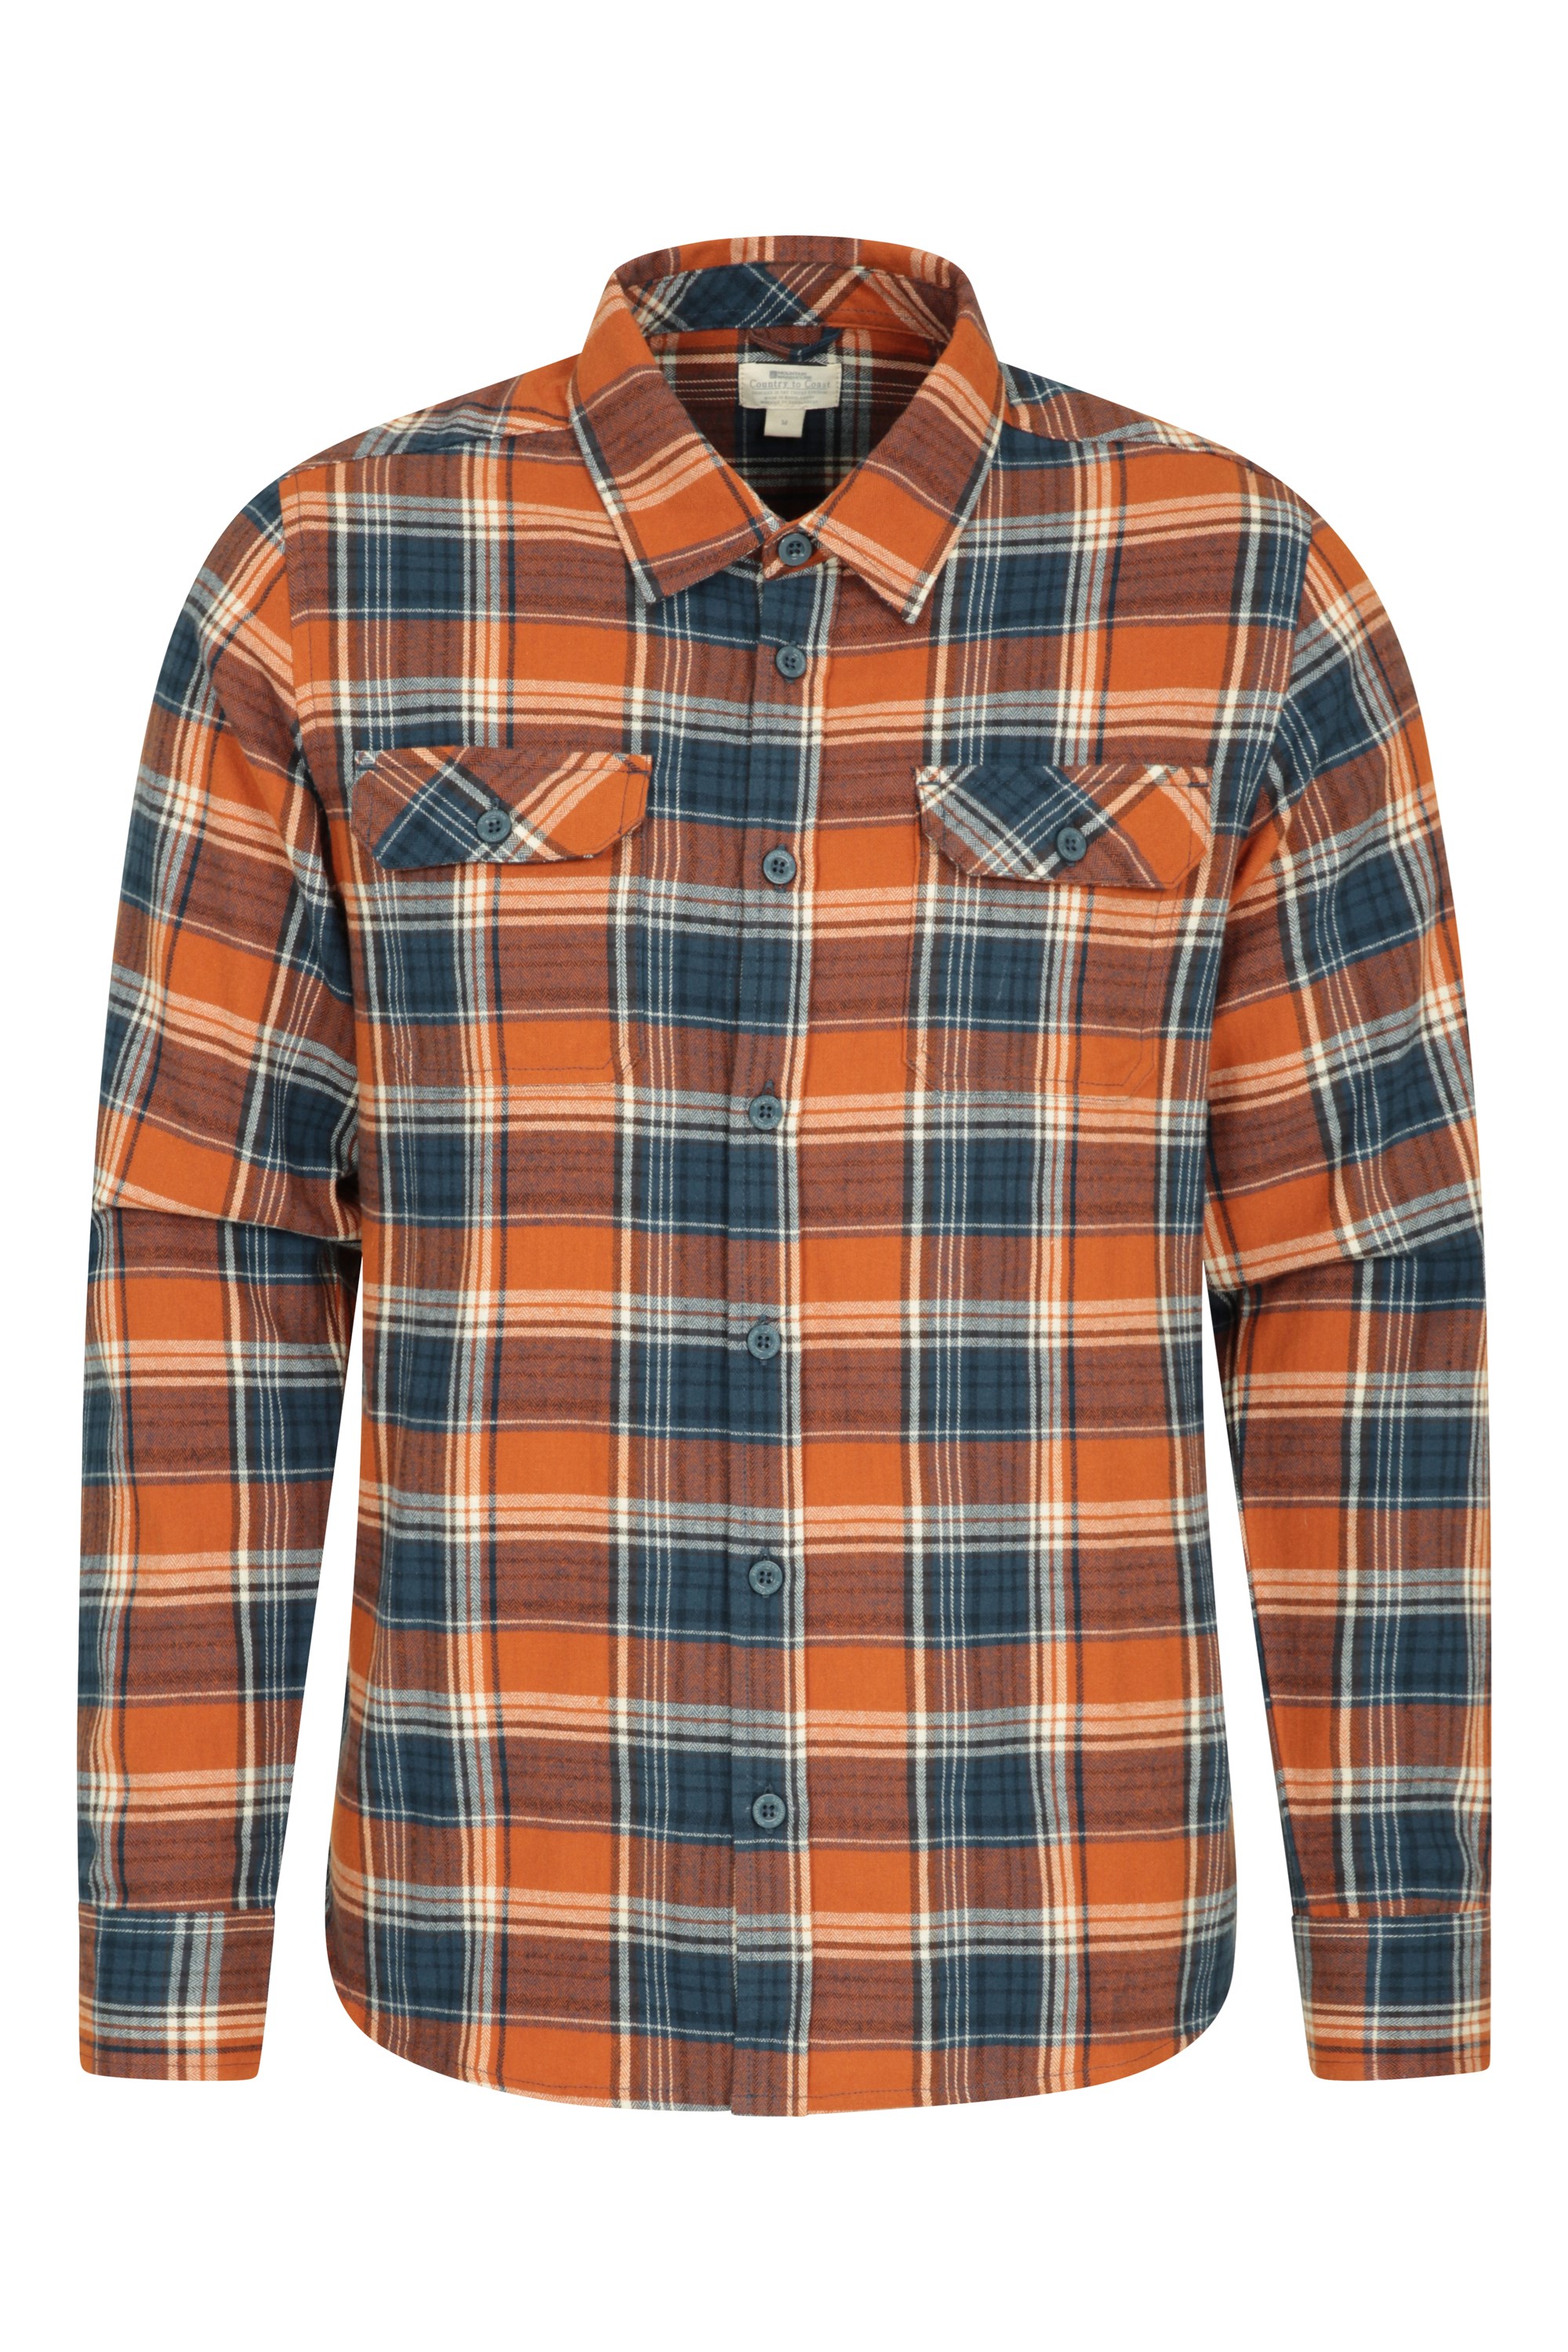 Trace Mens Flannel Long Sleeve Shirt - Orange